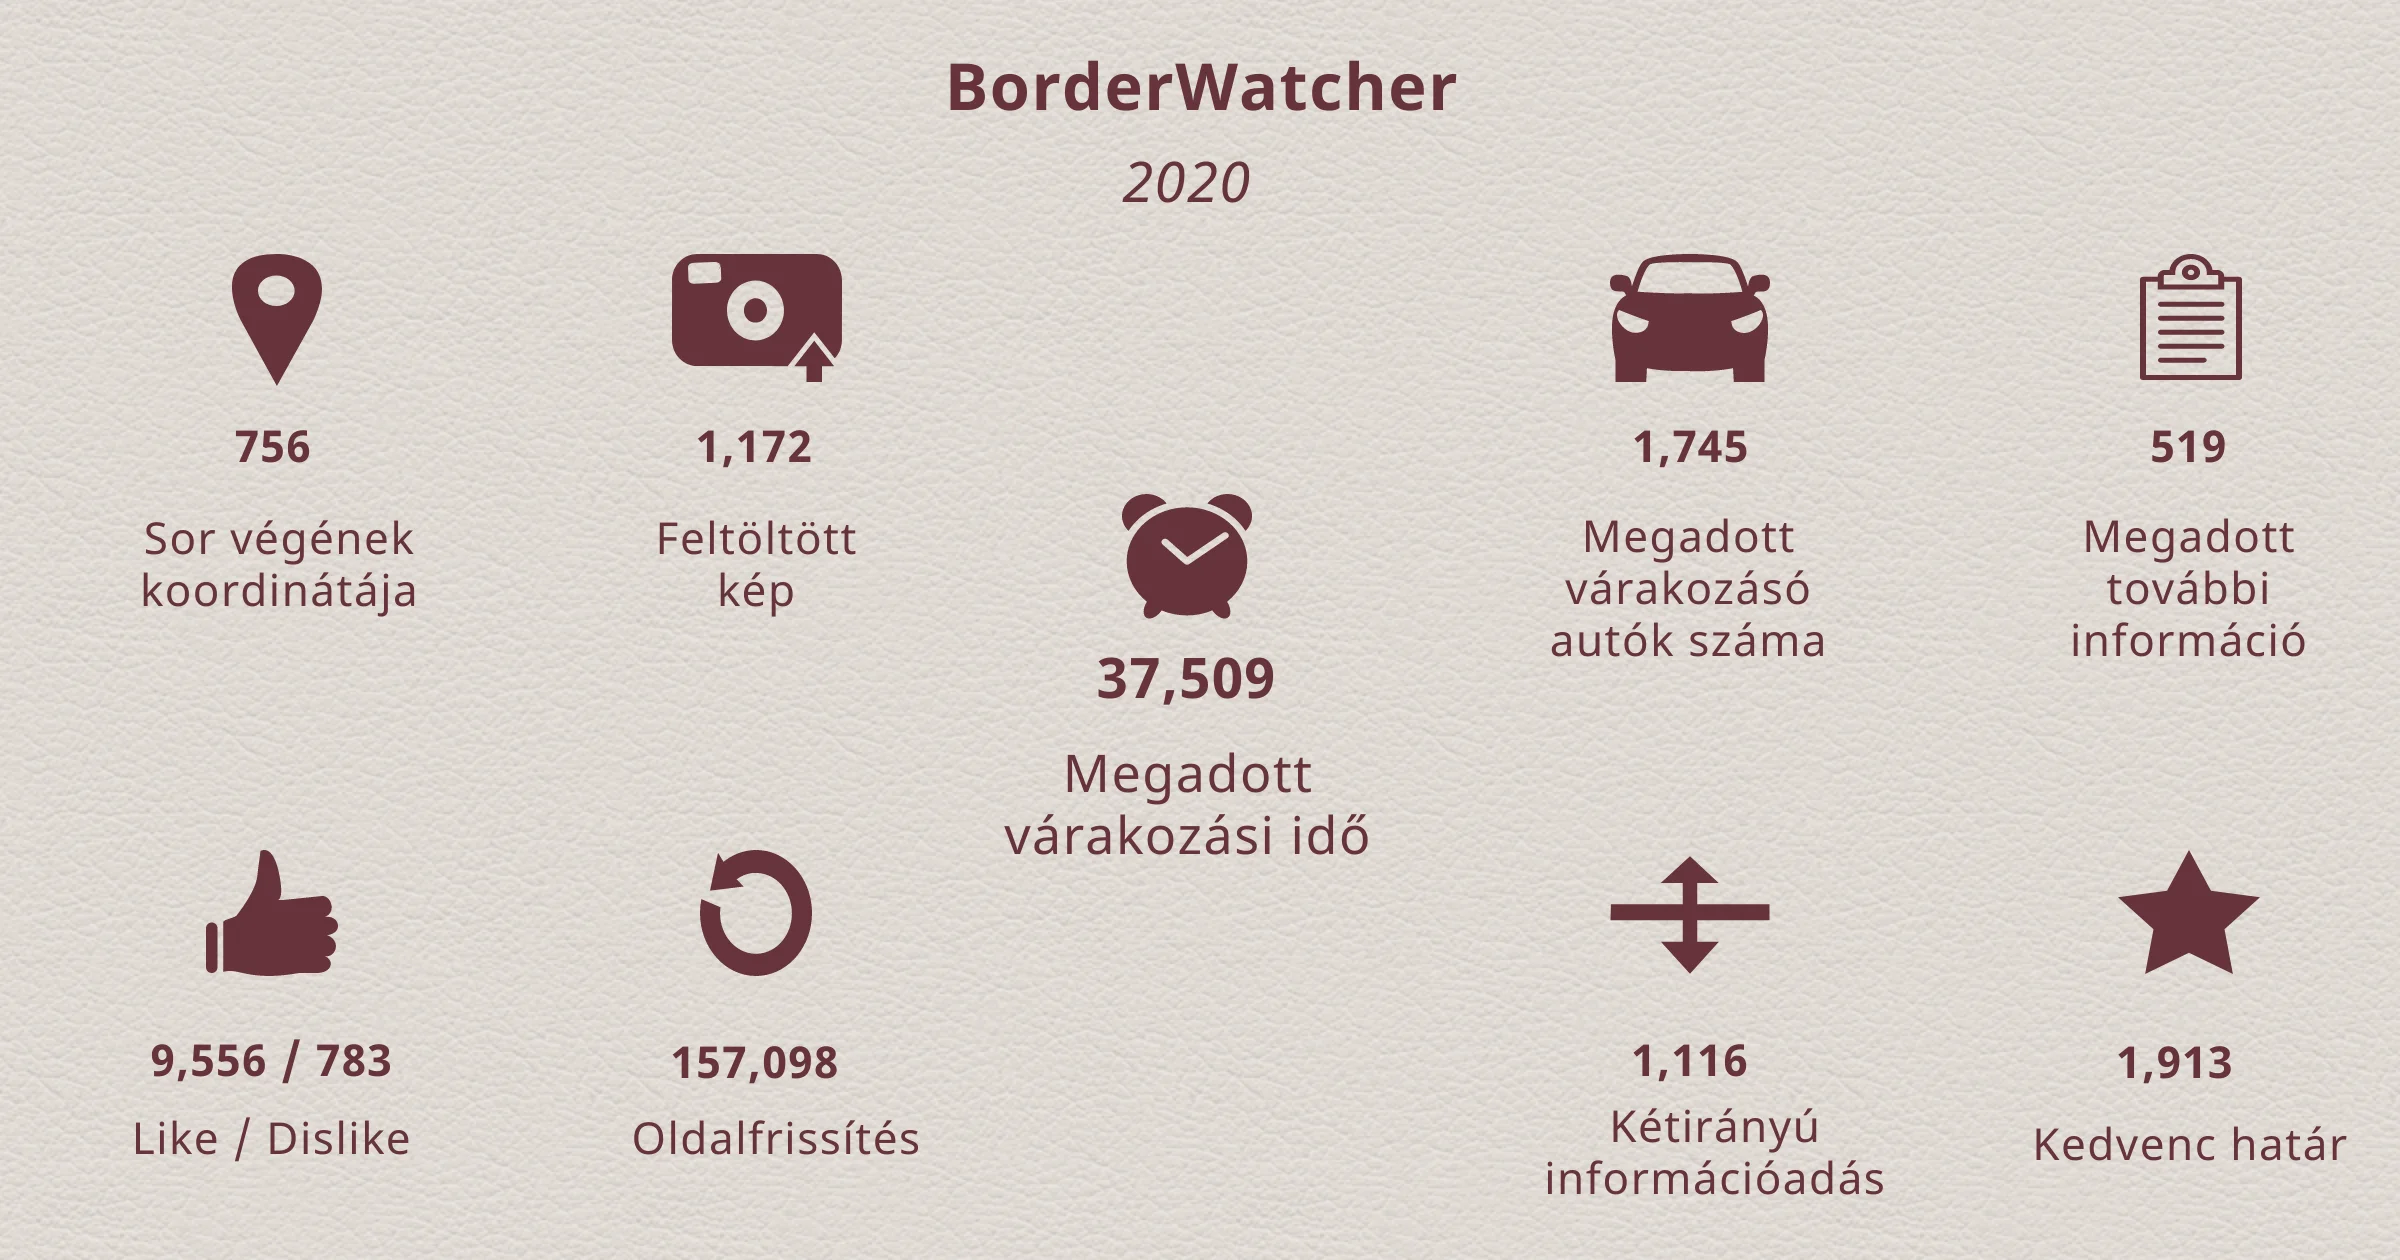 BorderWatcher statistic